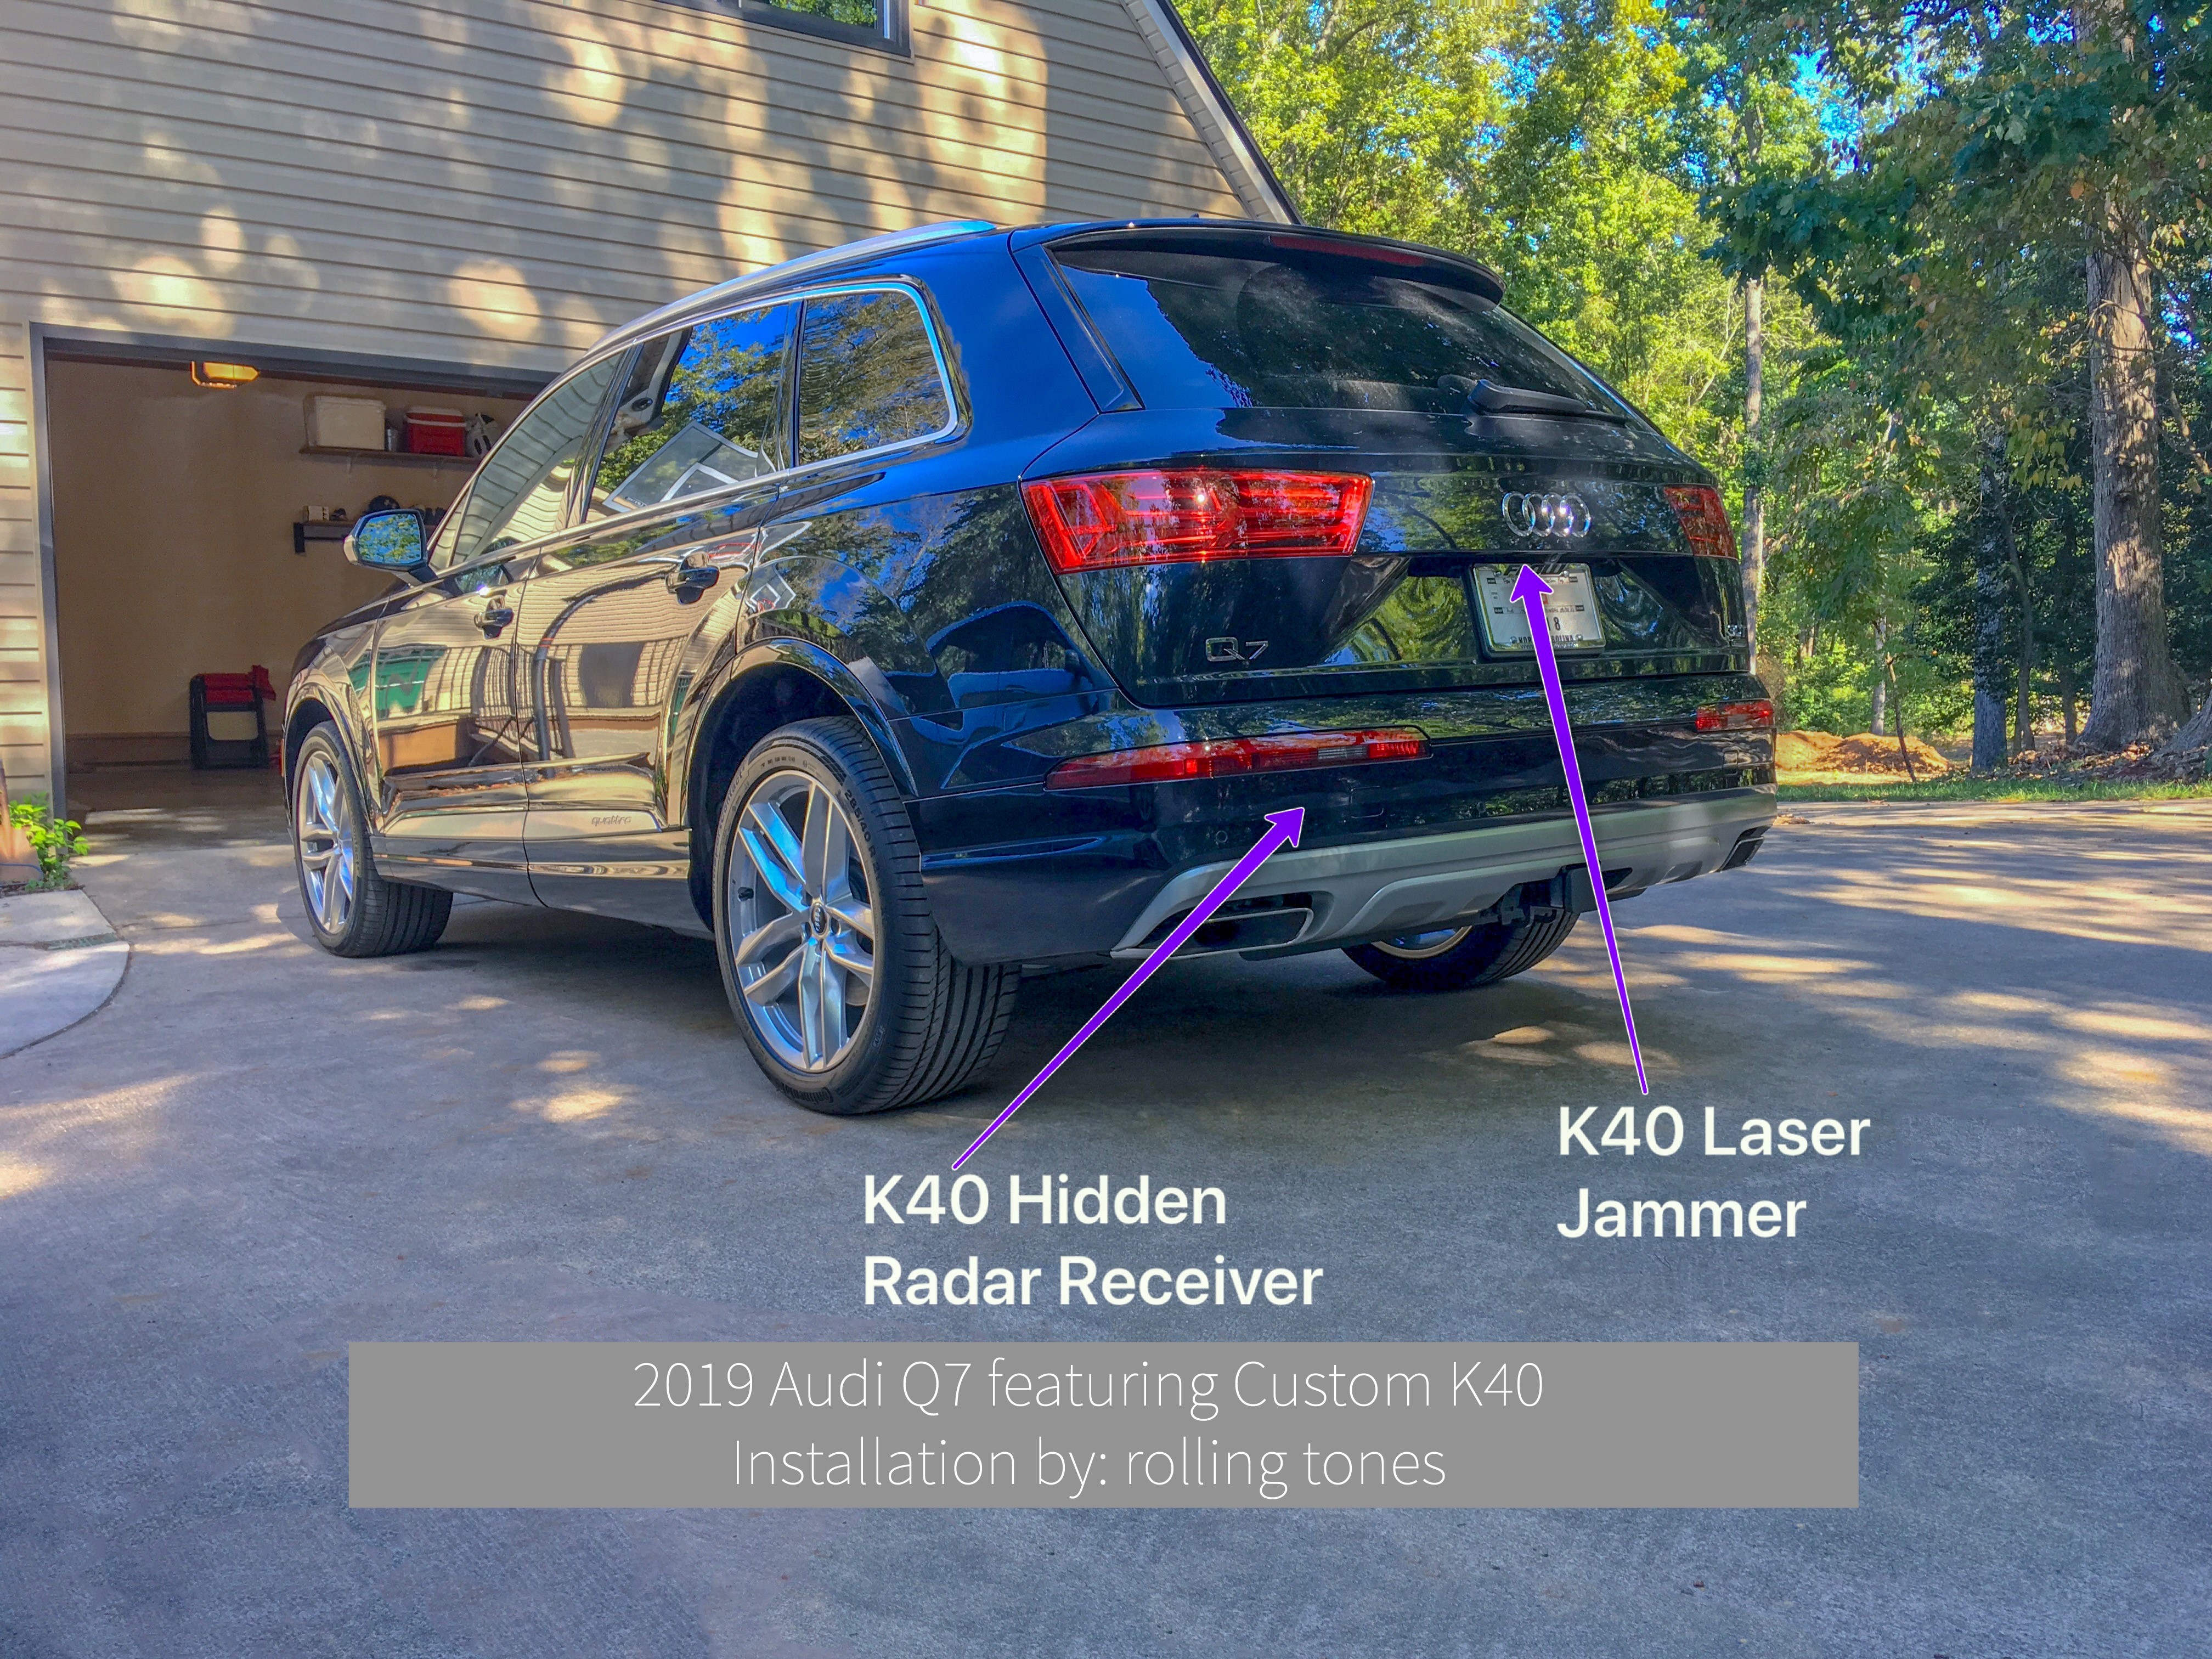 Custom K40 Police Laser Jammers and Hidden Radar Receiver Rear Installed on 2019 Audi Q7 in Charlotte, NC